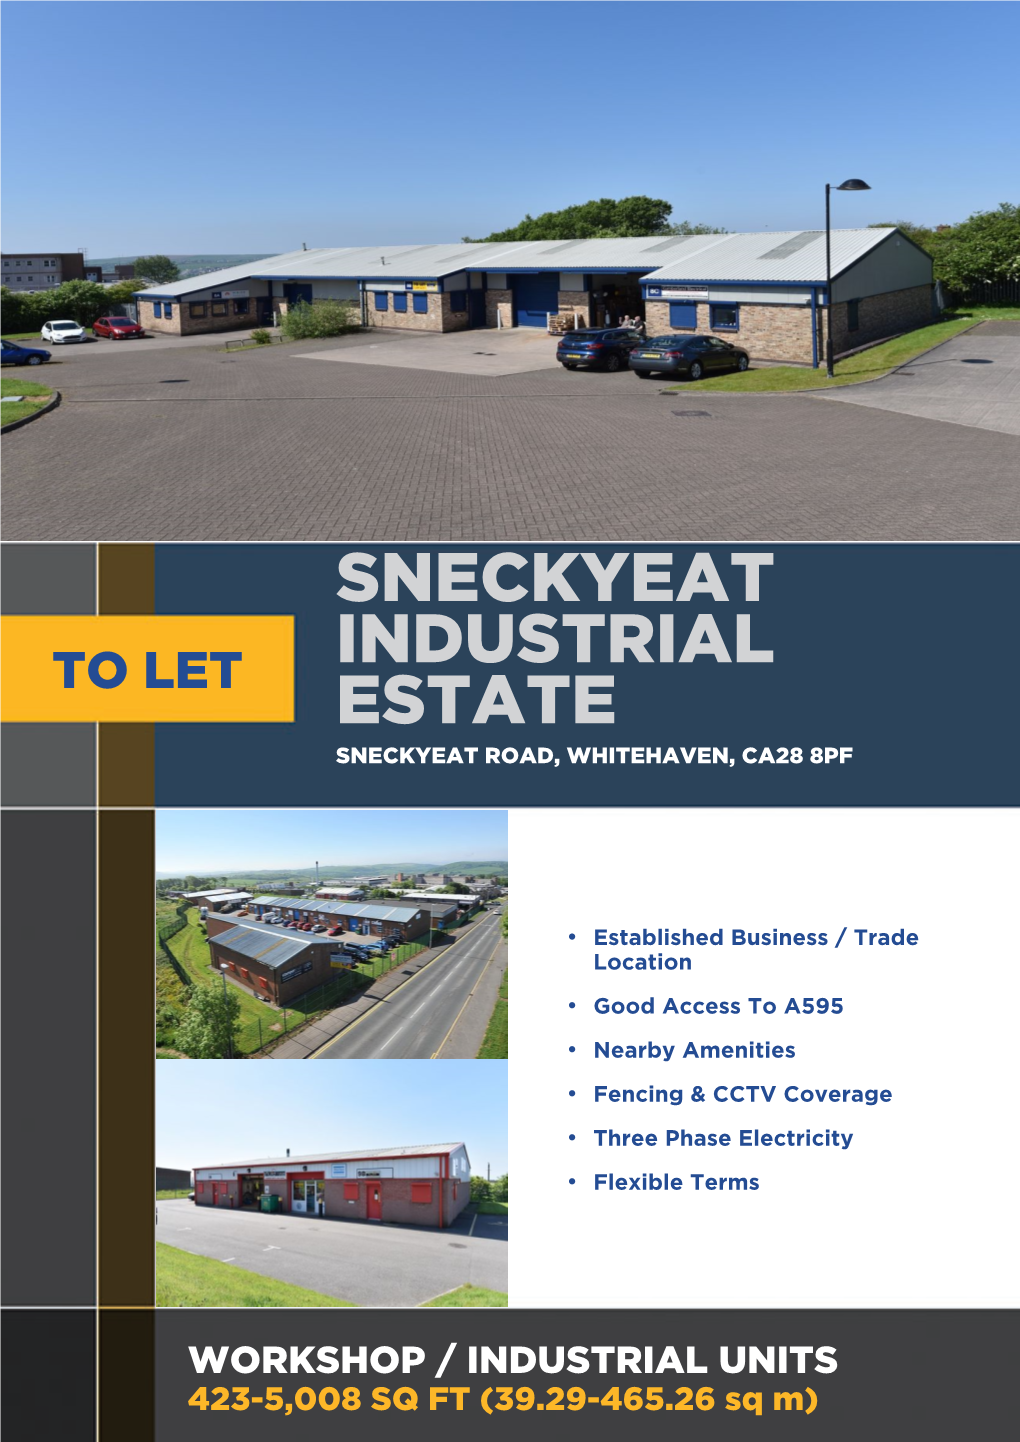 Sneckyeat Industrial Estate Ca28 Sneckeyat Road, Whitehaven 8Pf